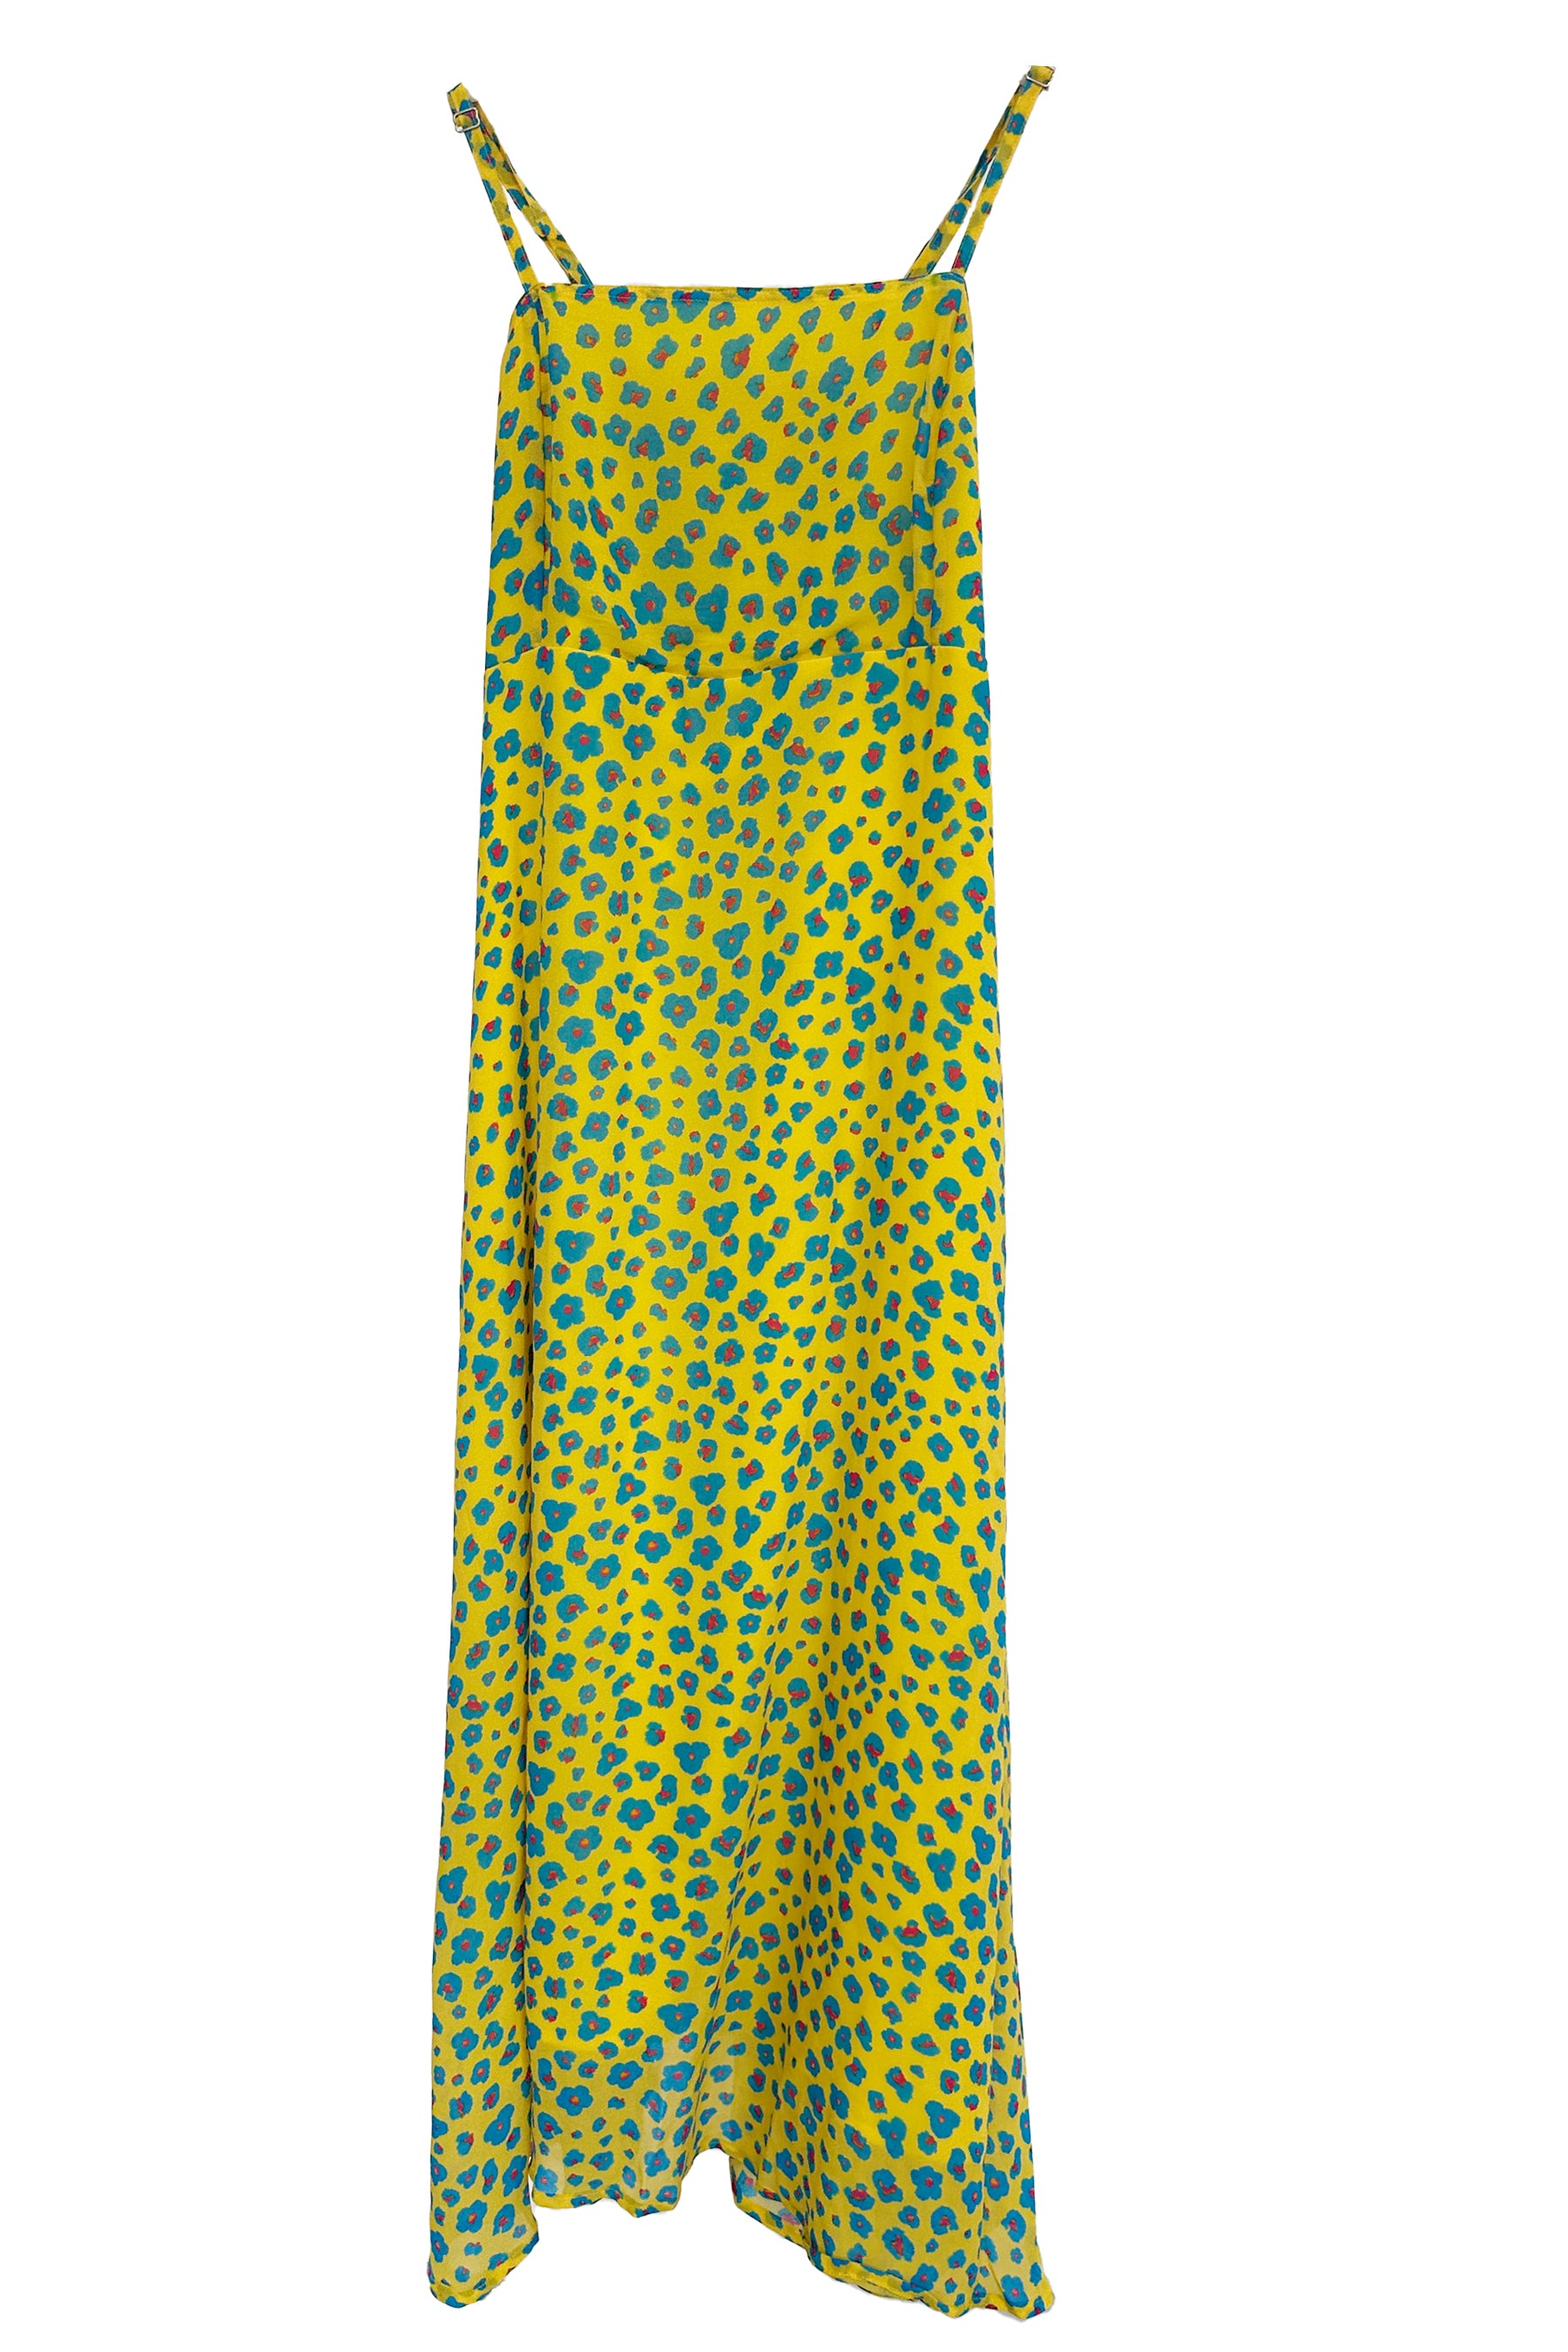 Yellow Jaguar Dress